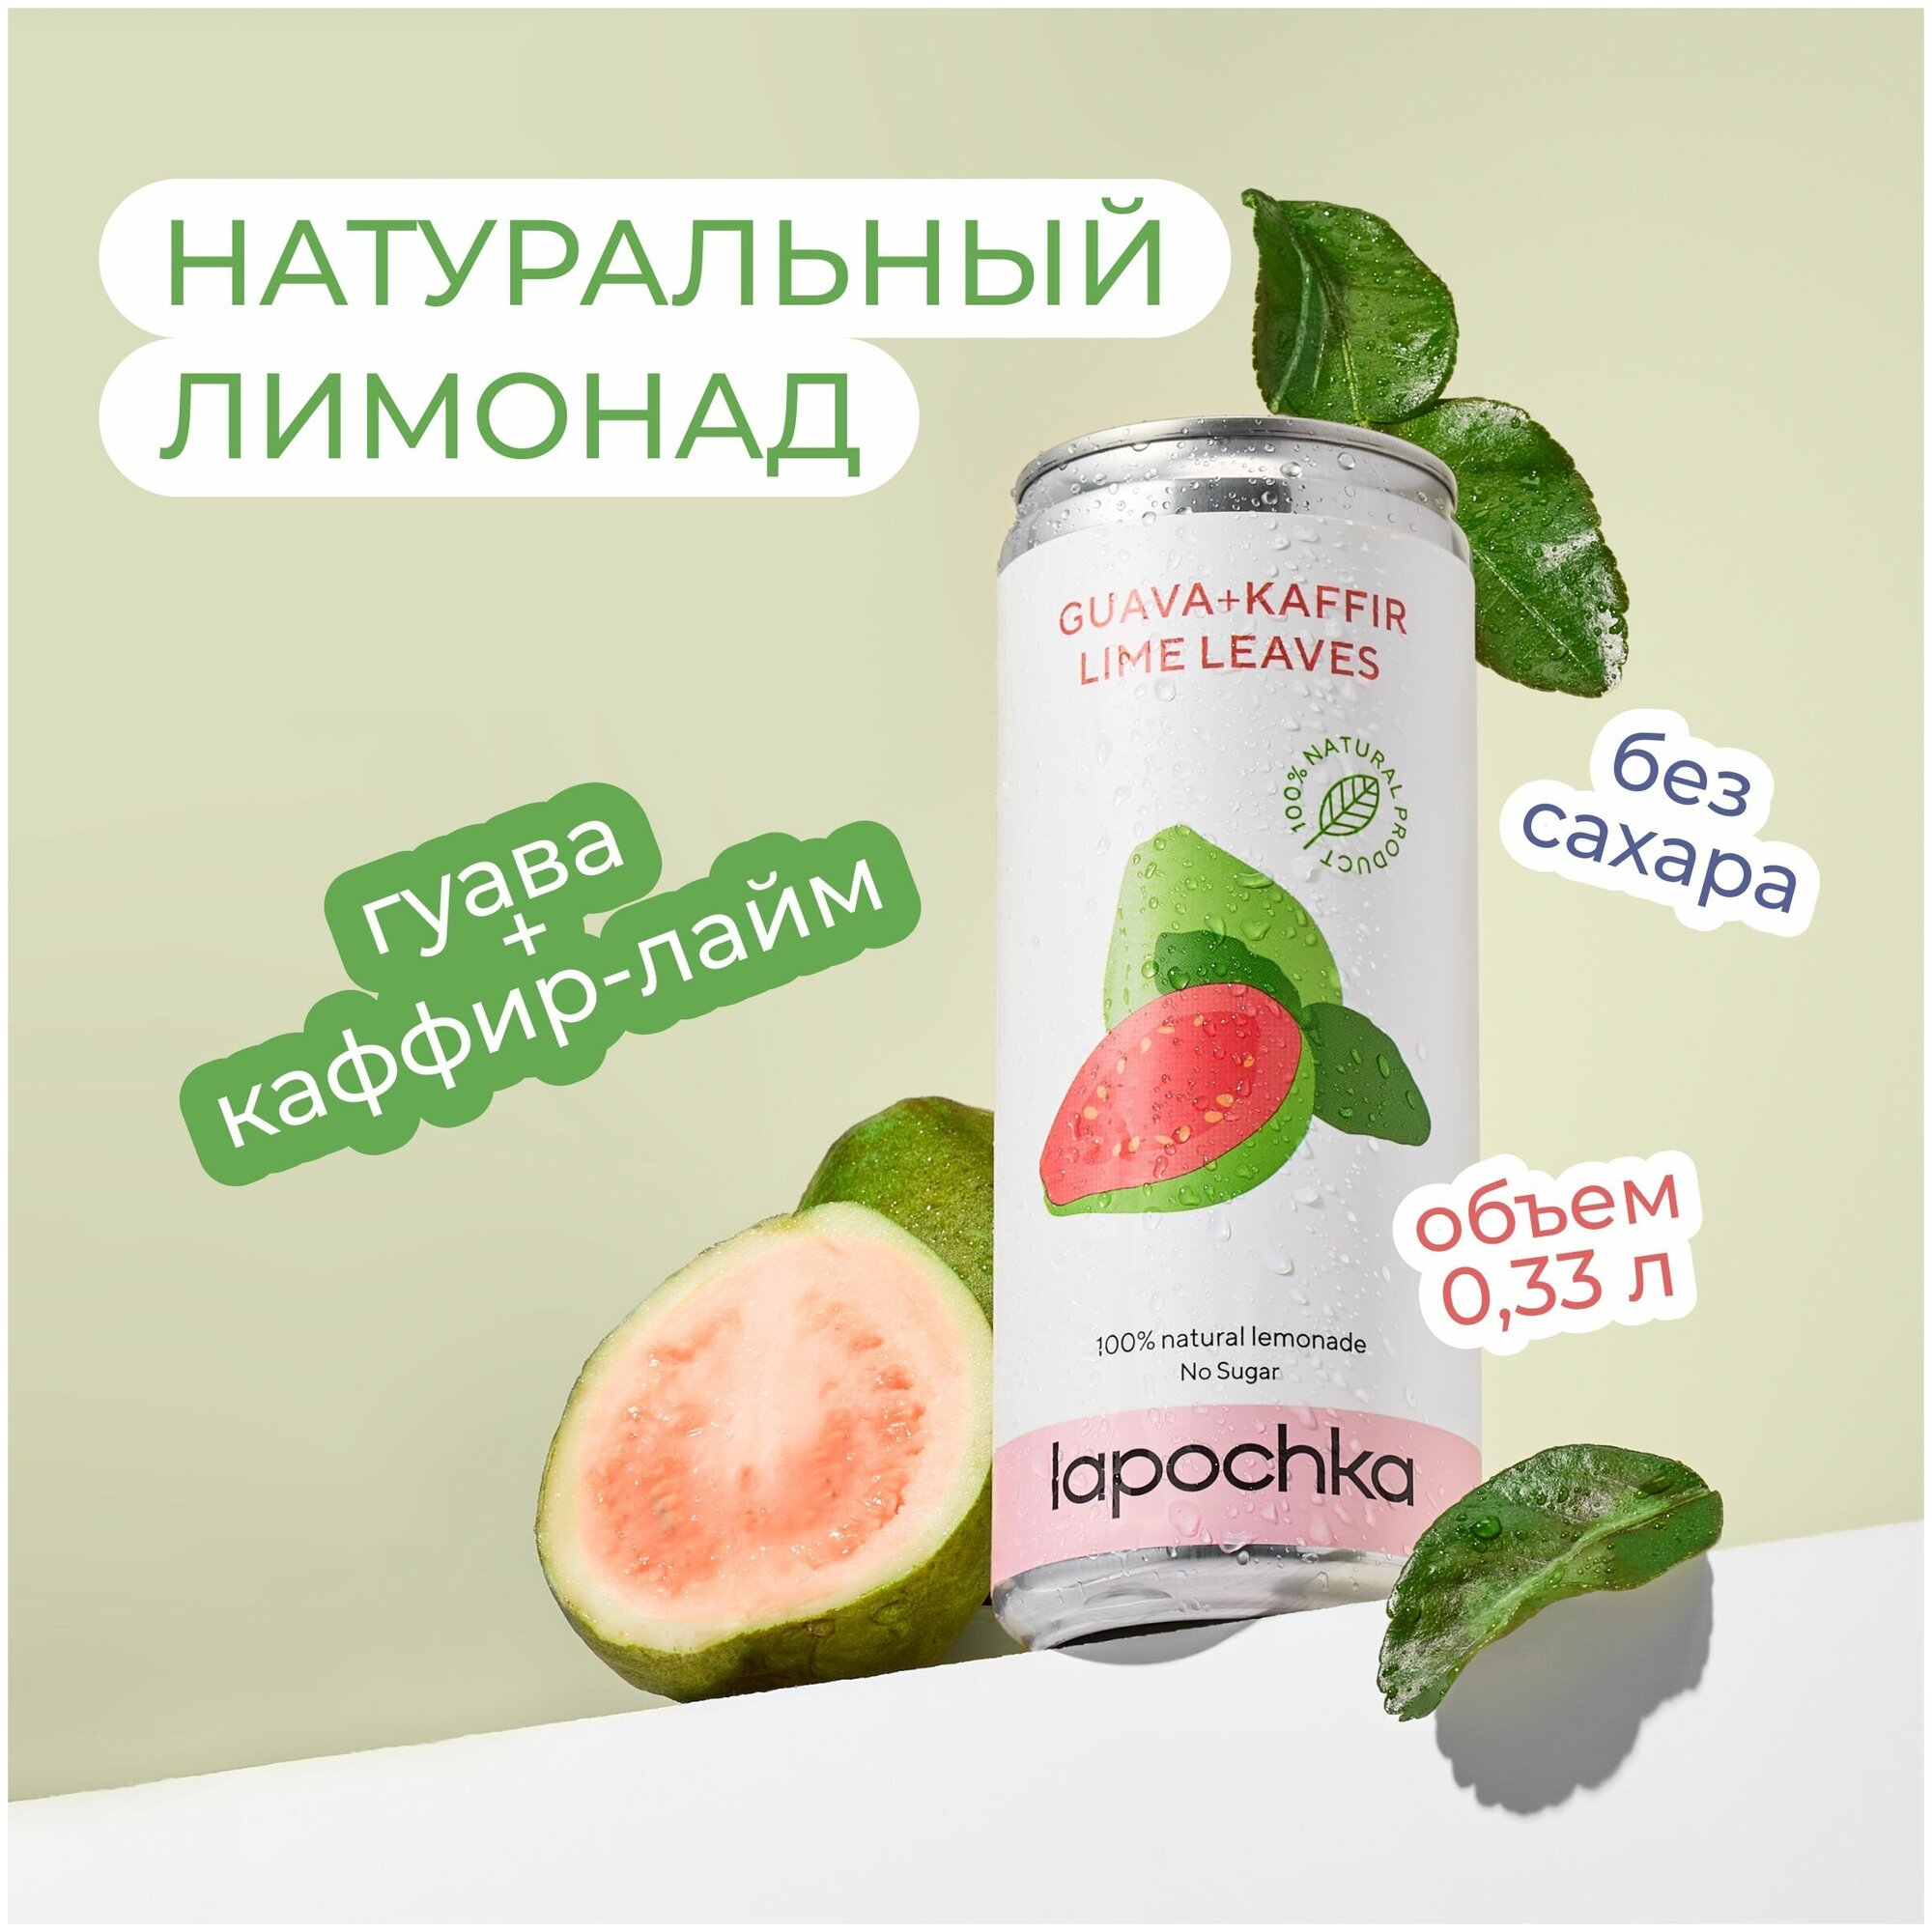 Натуральный лимонад Лапочка без сахара LAPOCHKA (Guava + Kaffir lime Leaves) 0,33л - фотография № 1